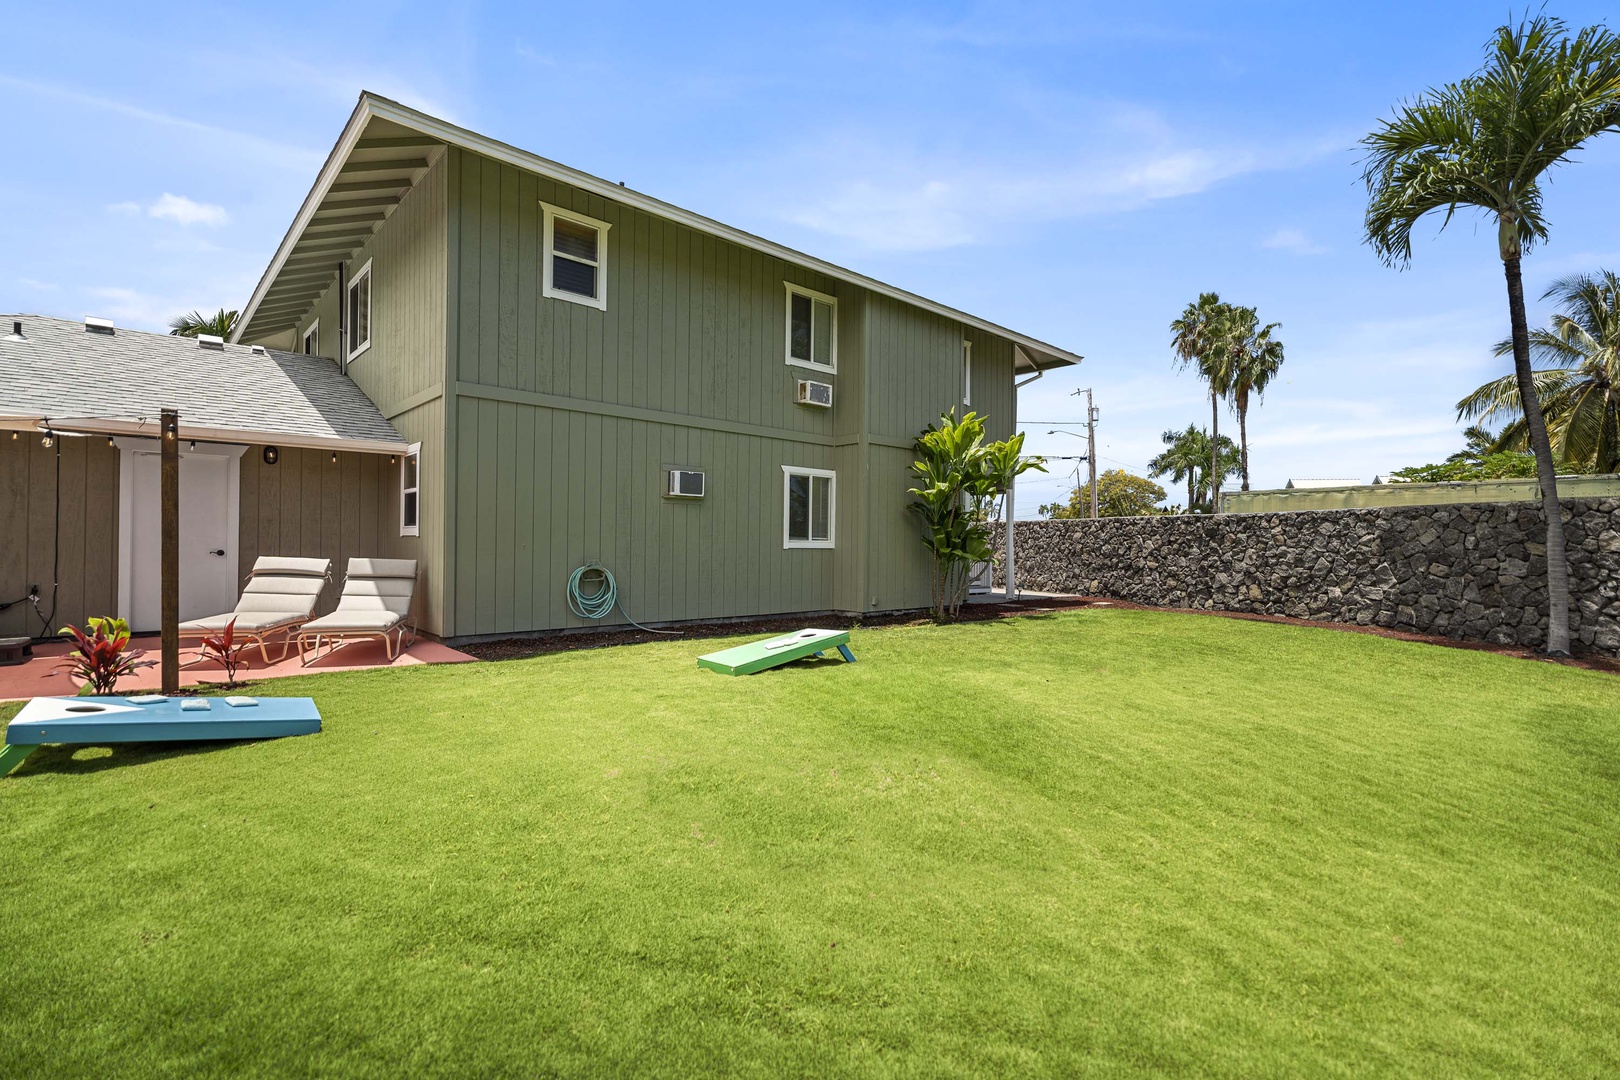 Kailua Kona Vacation Rentals, Hale A Kai - Spacious yard for peaceful enjoyment